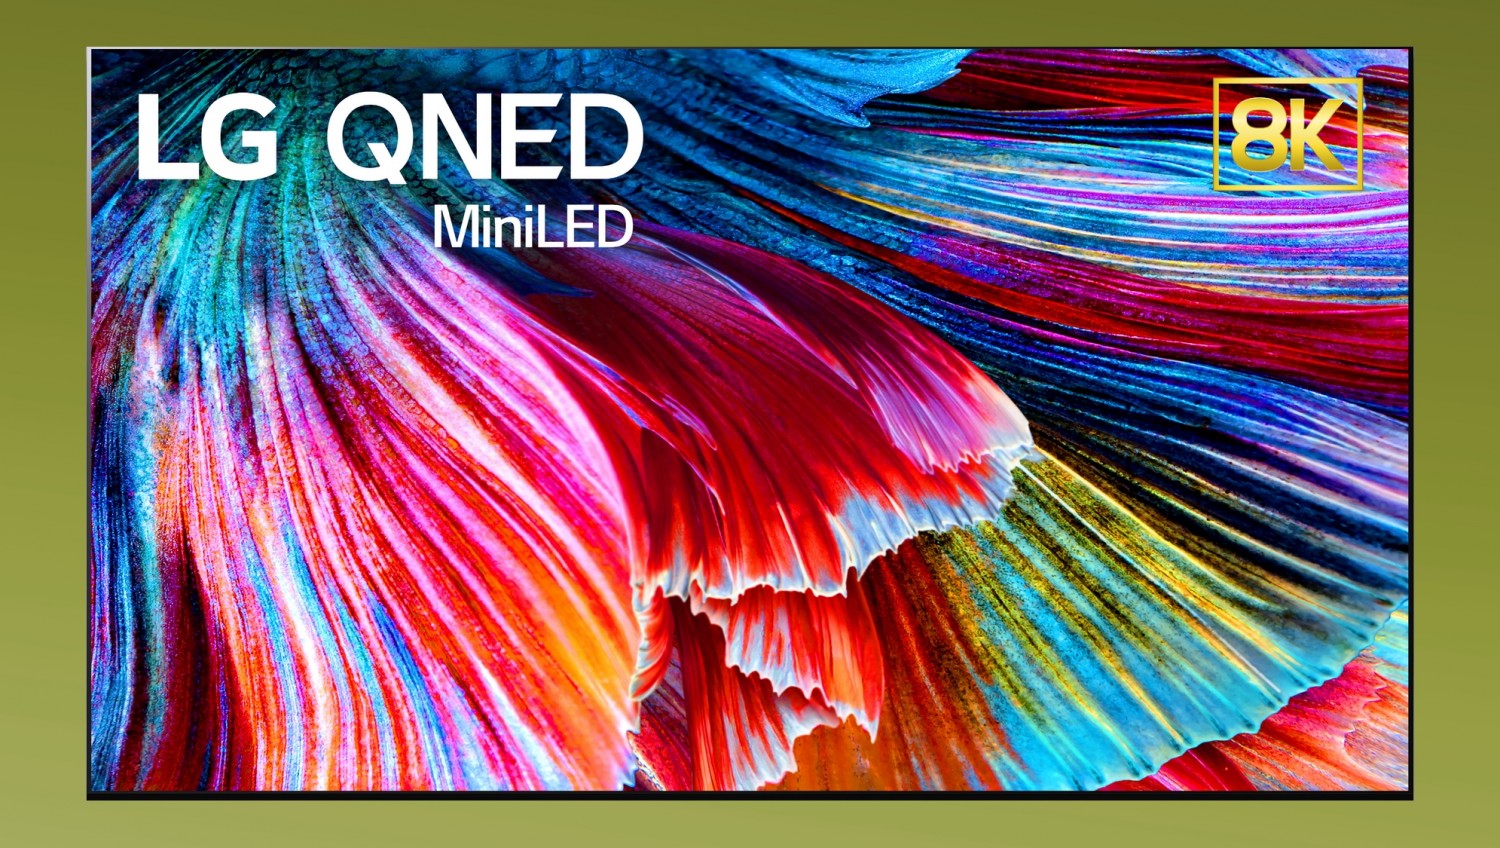 LG анонсировала новые телевизоры на основе технологии QNED